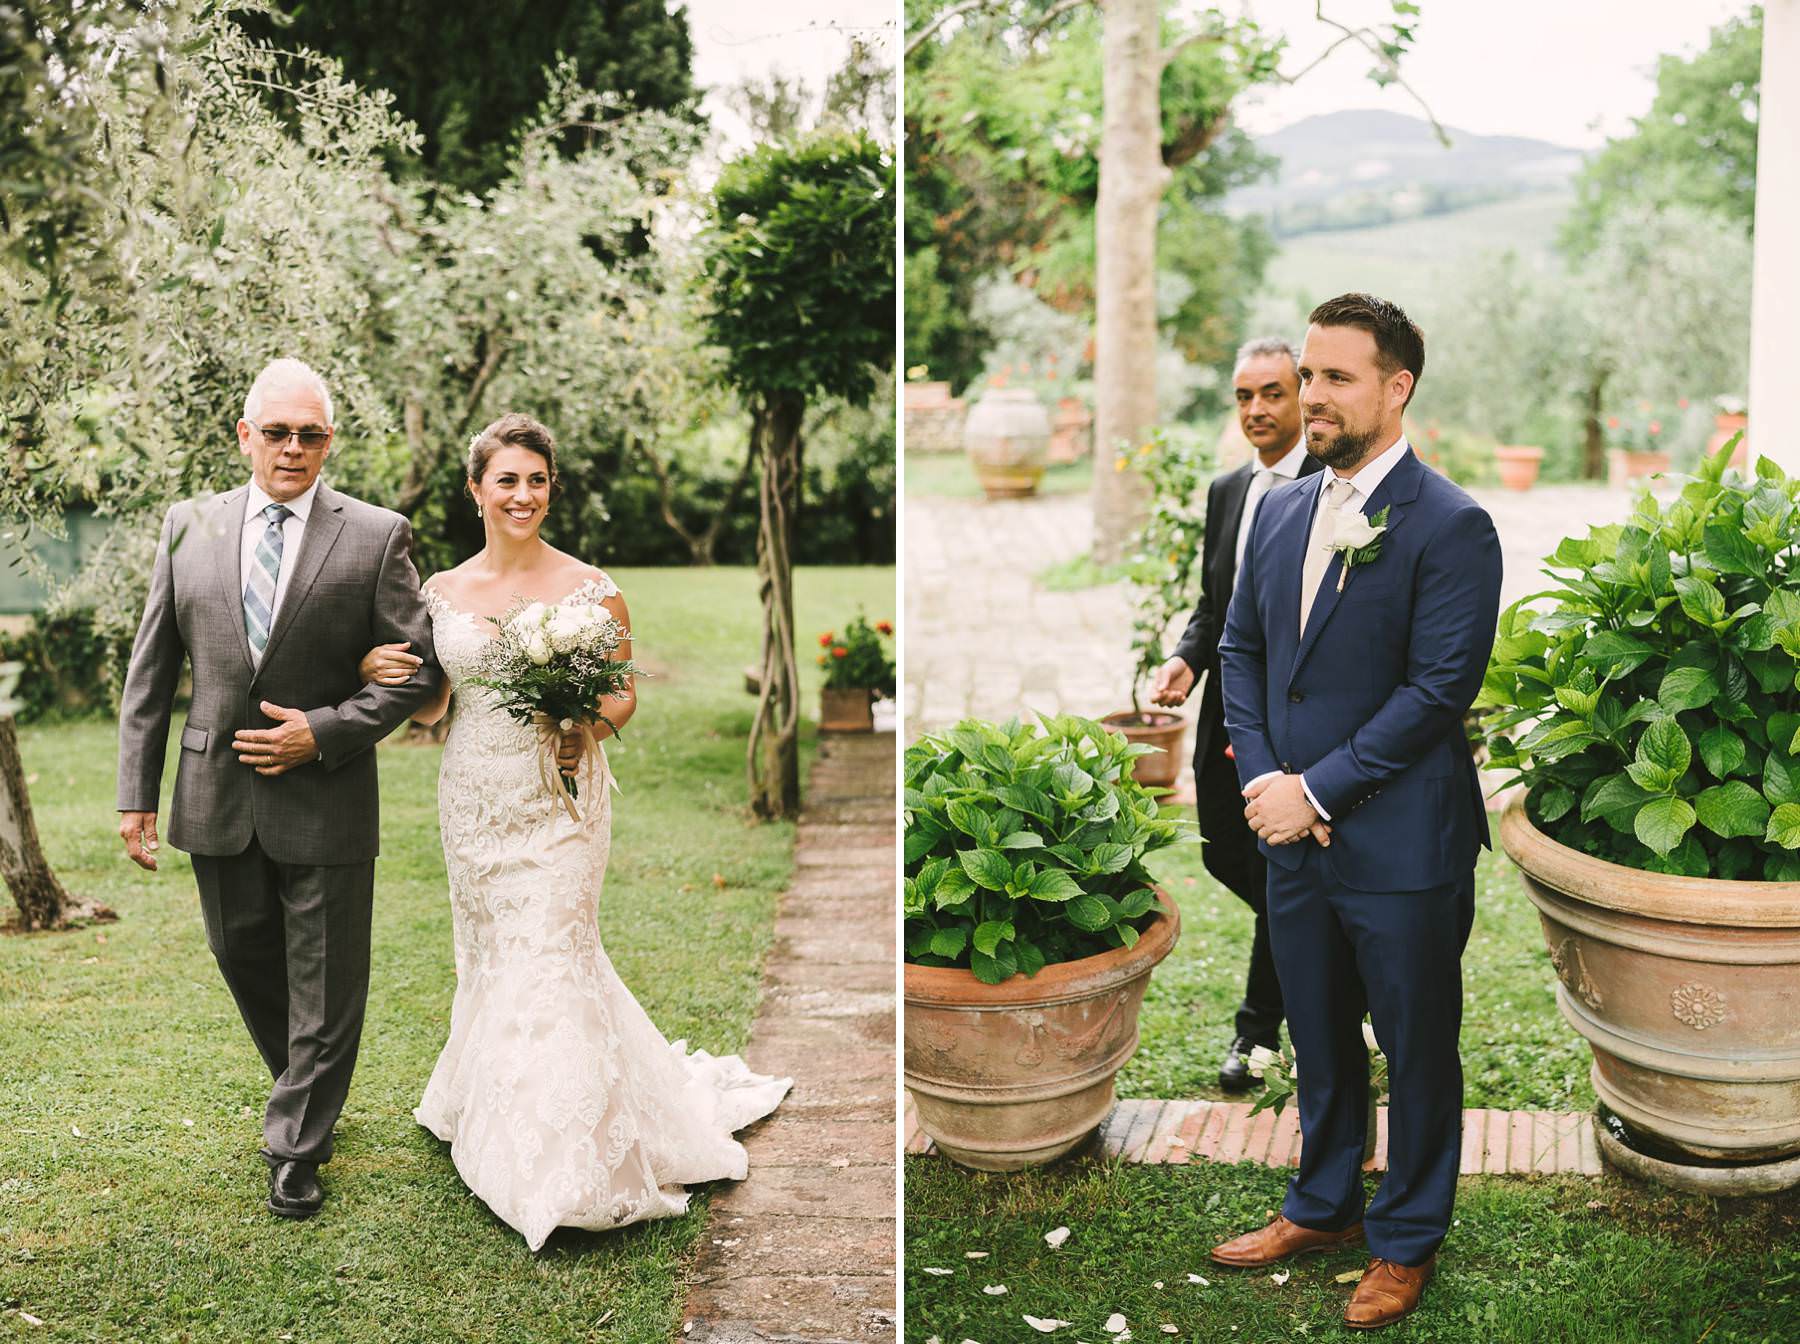 Intimate destination wedding Tuscany countryside Villa Ripanera